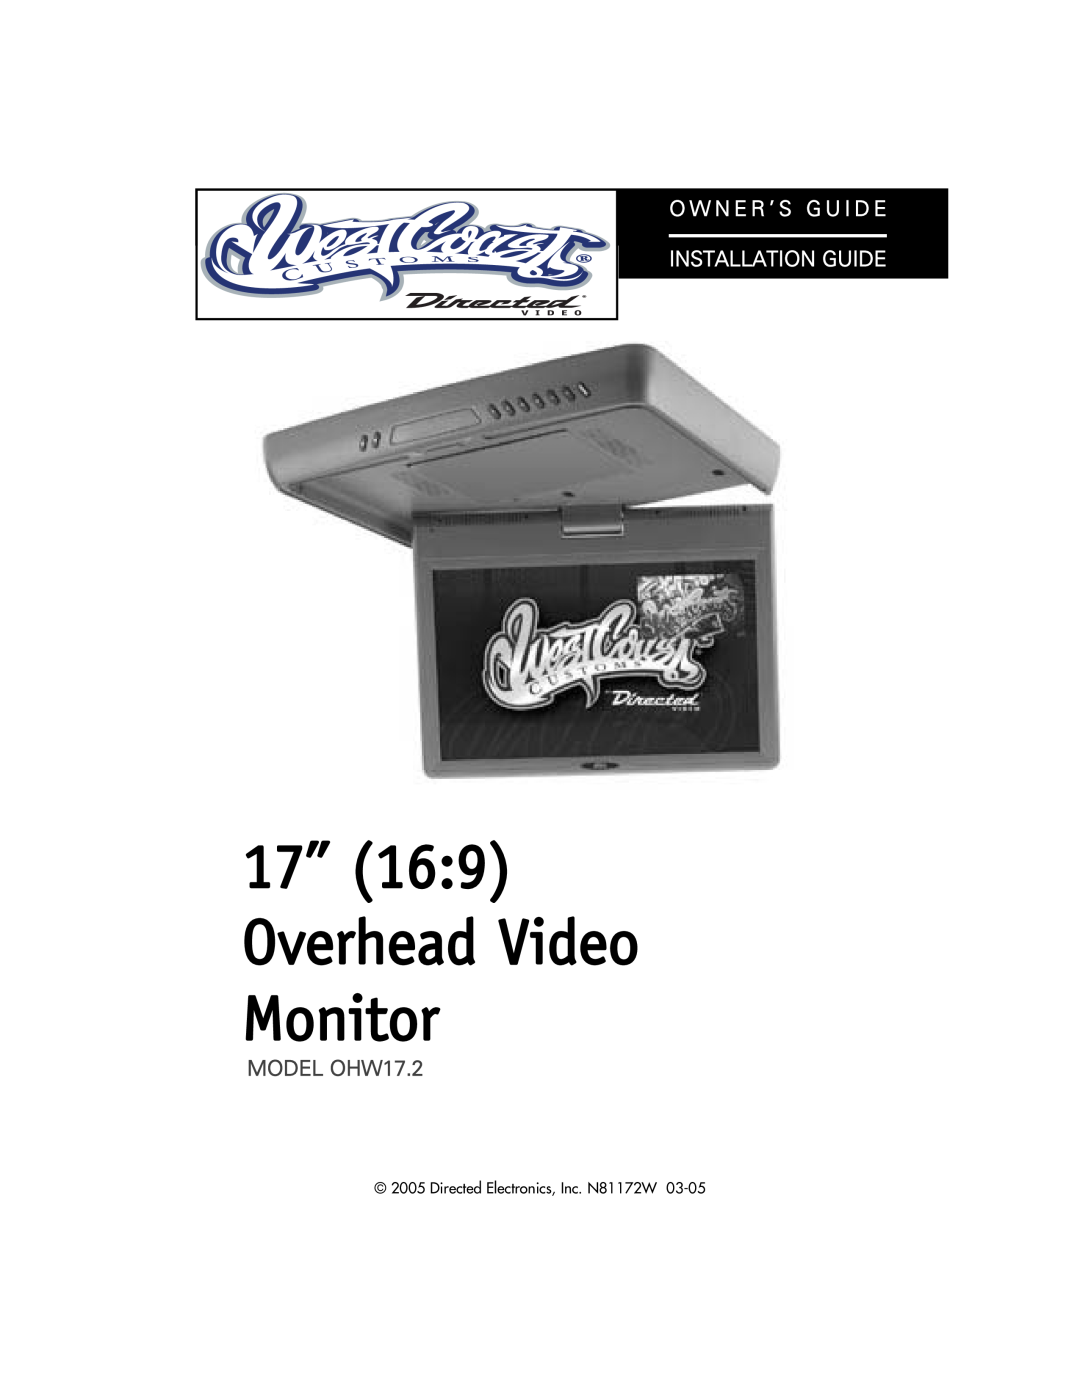 Directed Video manual MODEL OHW17.2, 17” 169 Overhead Video Monitor, O W N E R ’ S G U I D E Installation Guide 